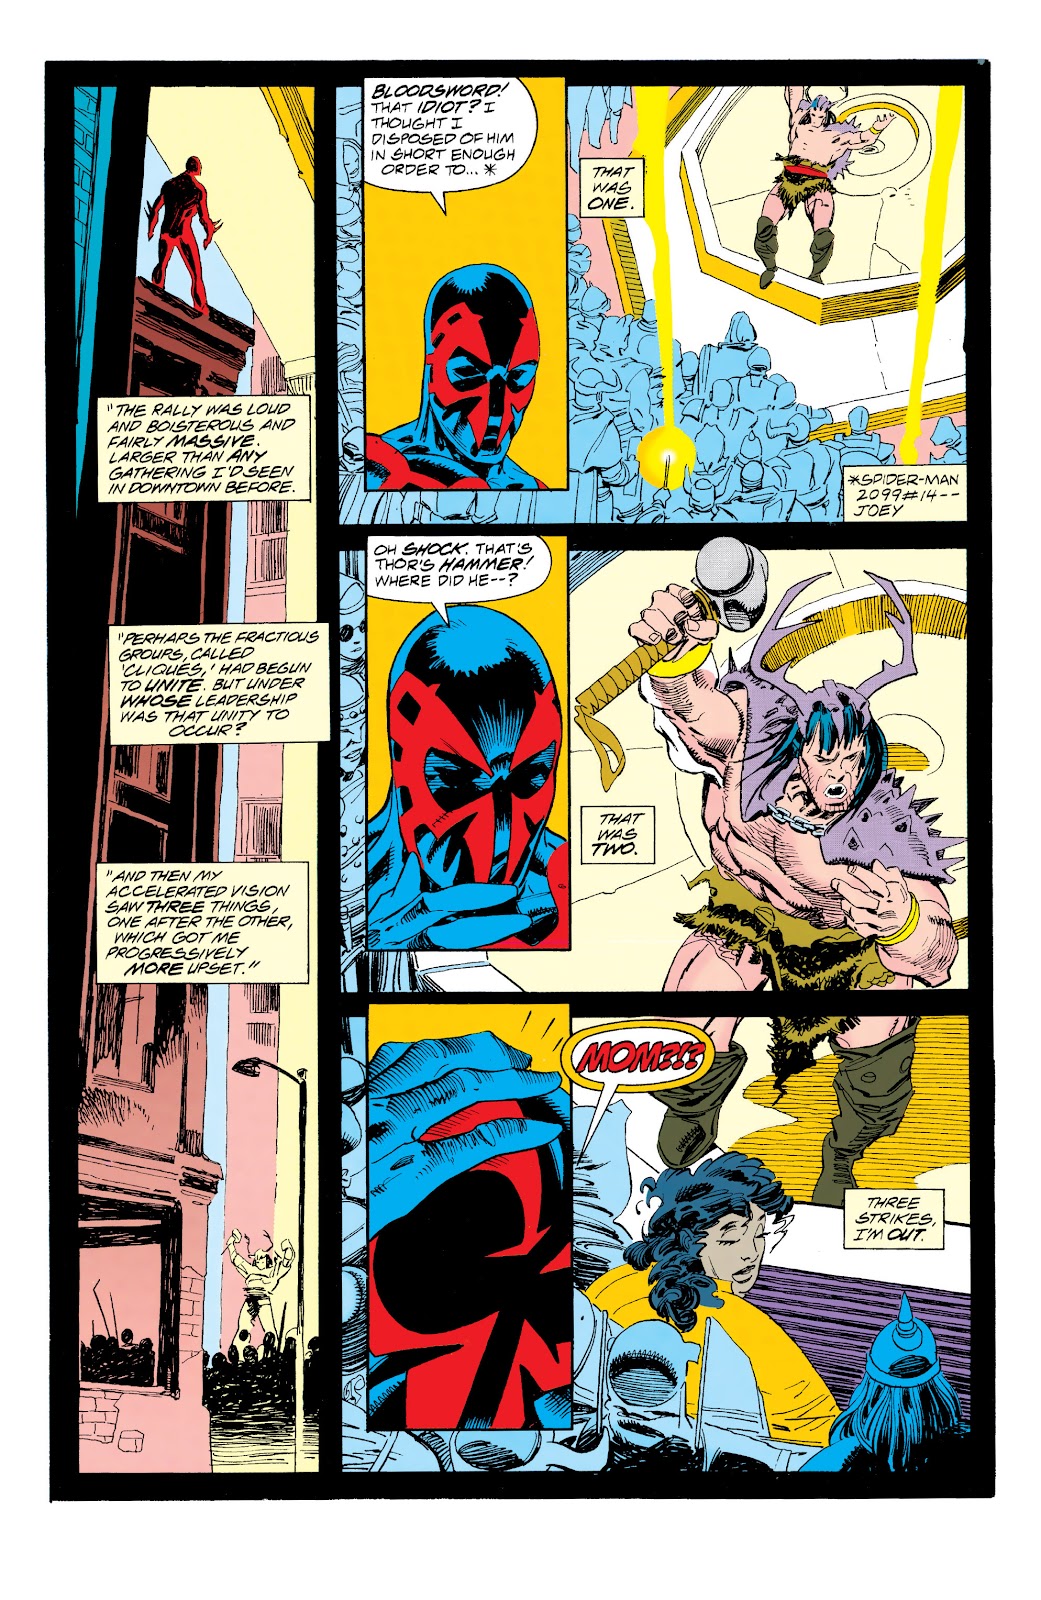 Spider-Man 2099 (1992) issue 17 - Page 9